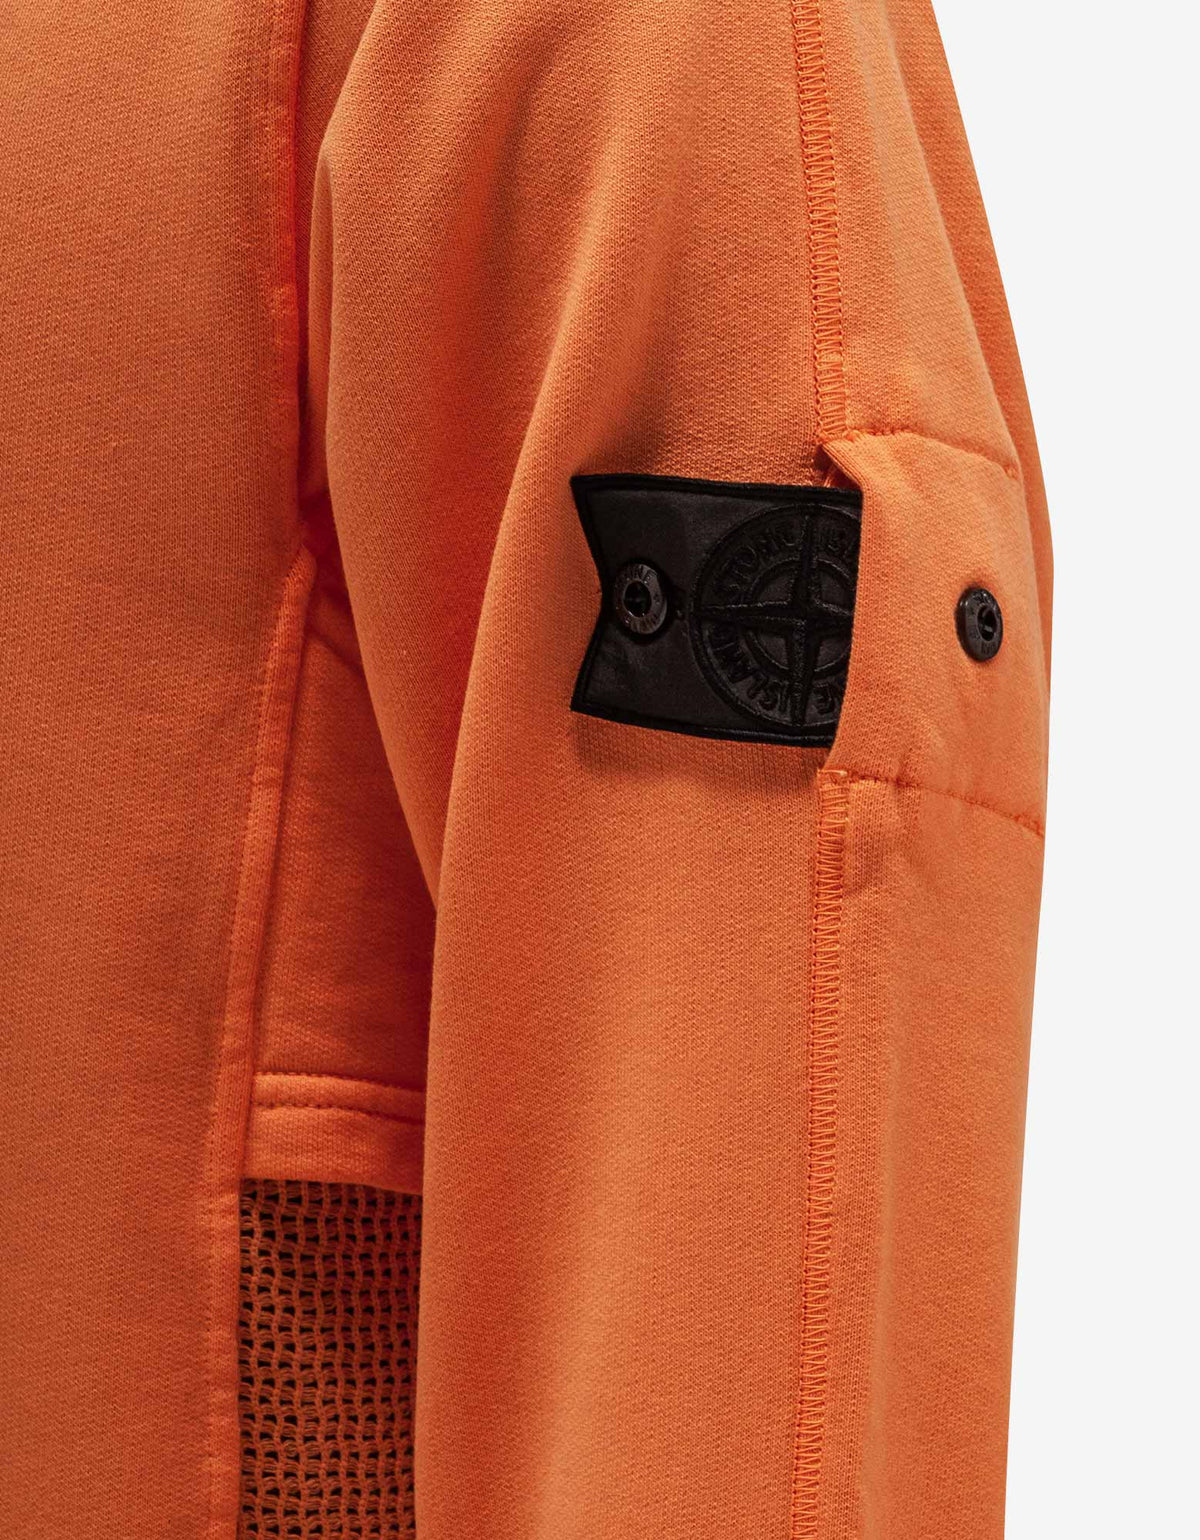 Stone Island Shadow Project Orange Mesh Detail Sweatshirt